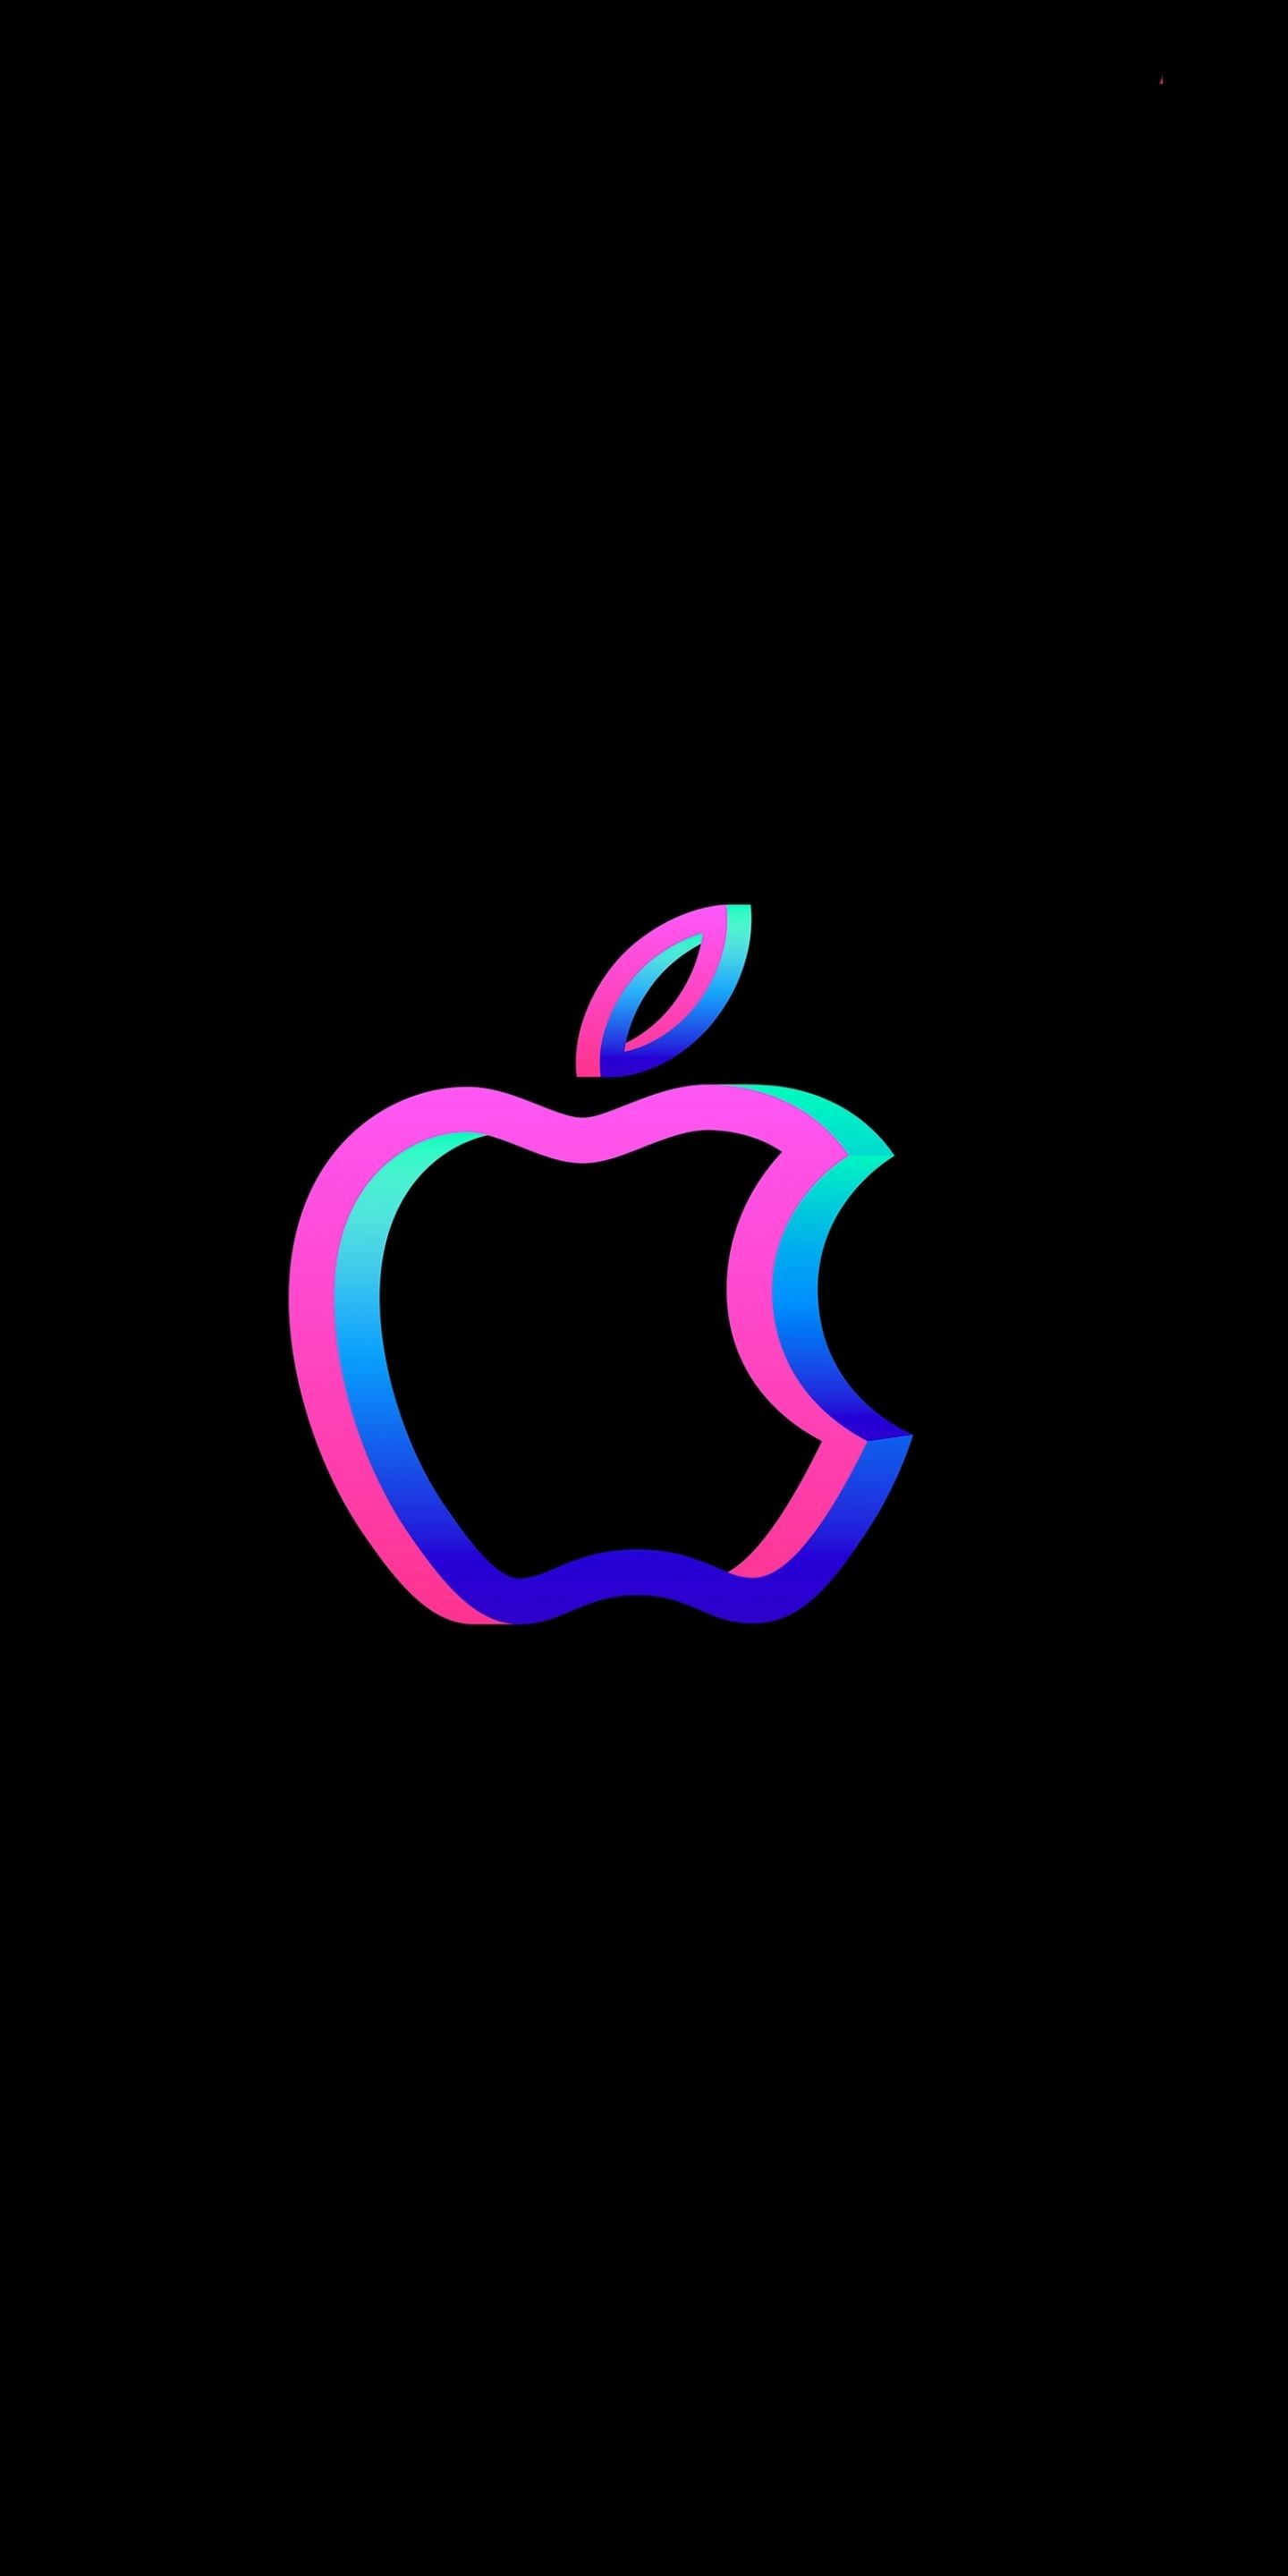 X apple logo amoled wallpaper apple logo wallpaper iphone apple logo wallpaper apple wallpaper